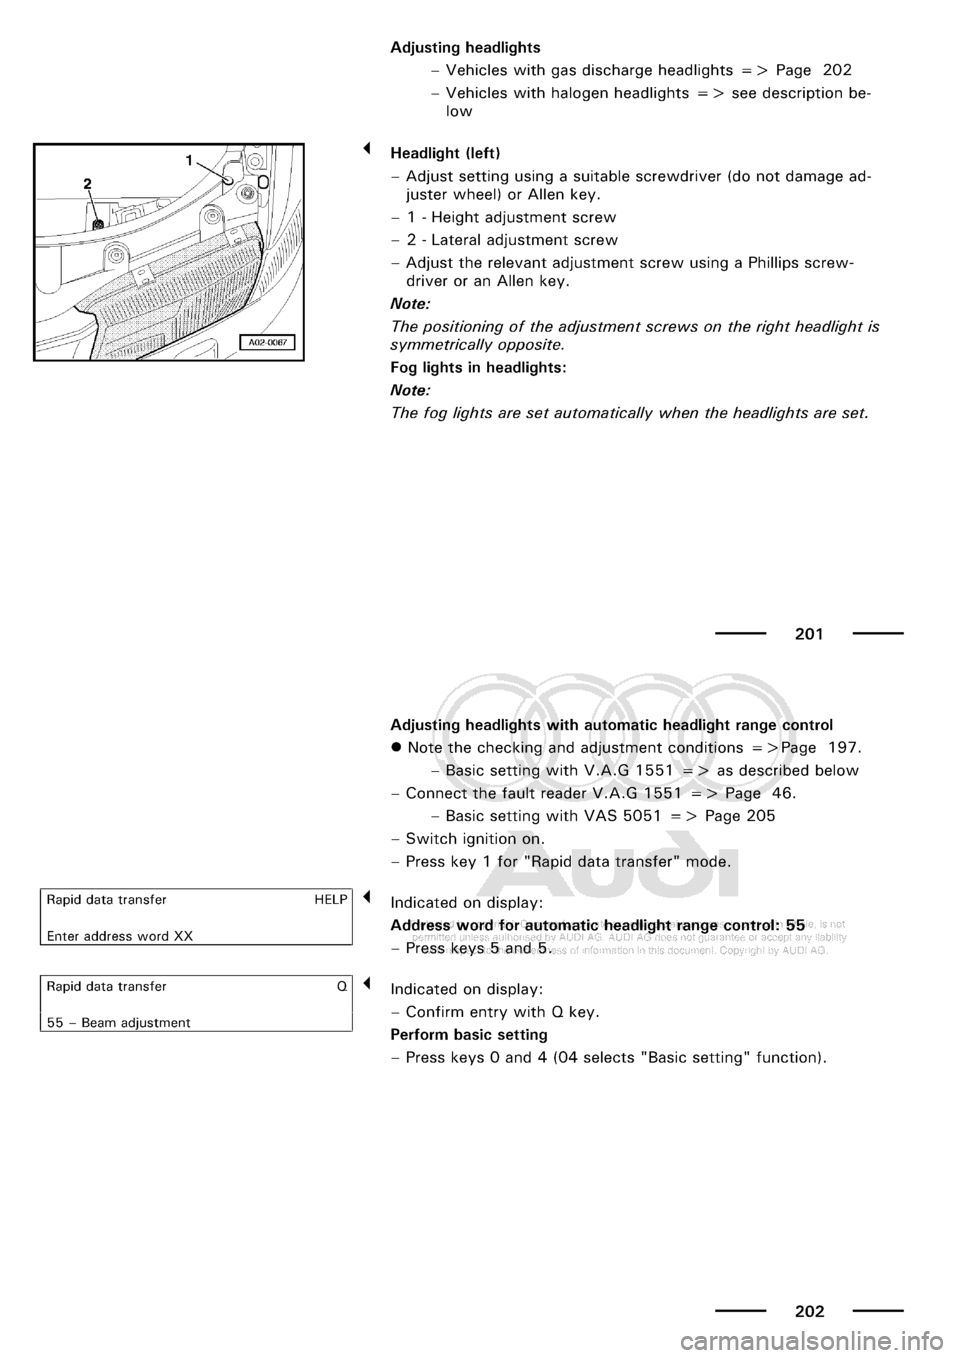 AUDI A3 1998 8L / 1.G Maintenance Workshop Manual 